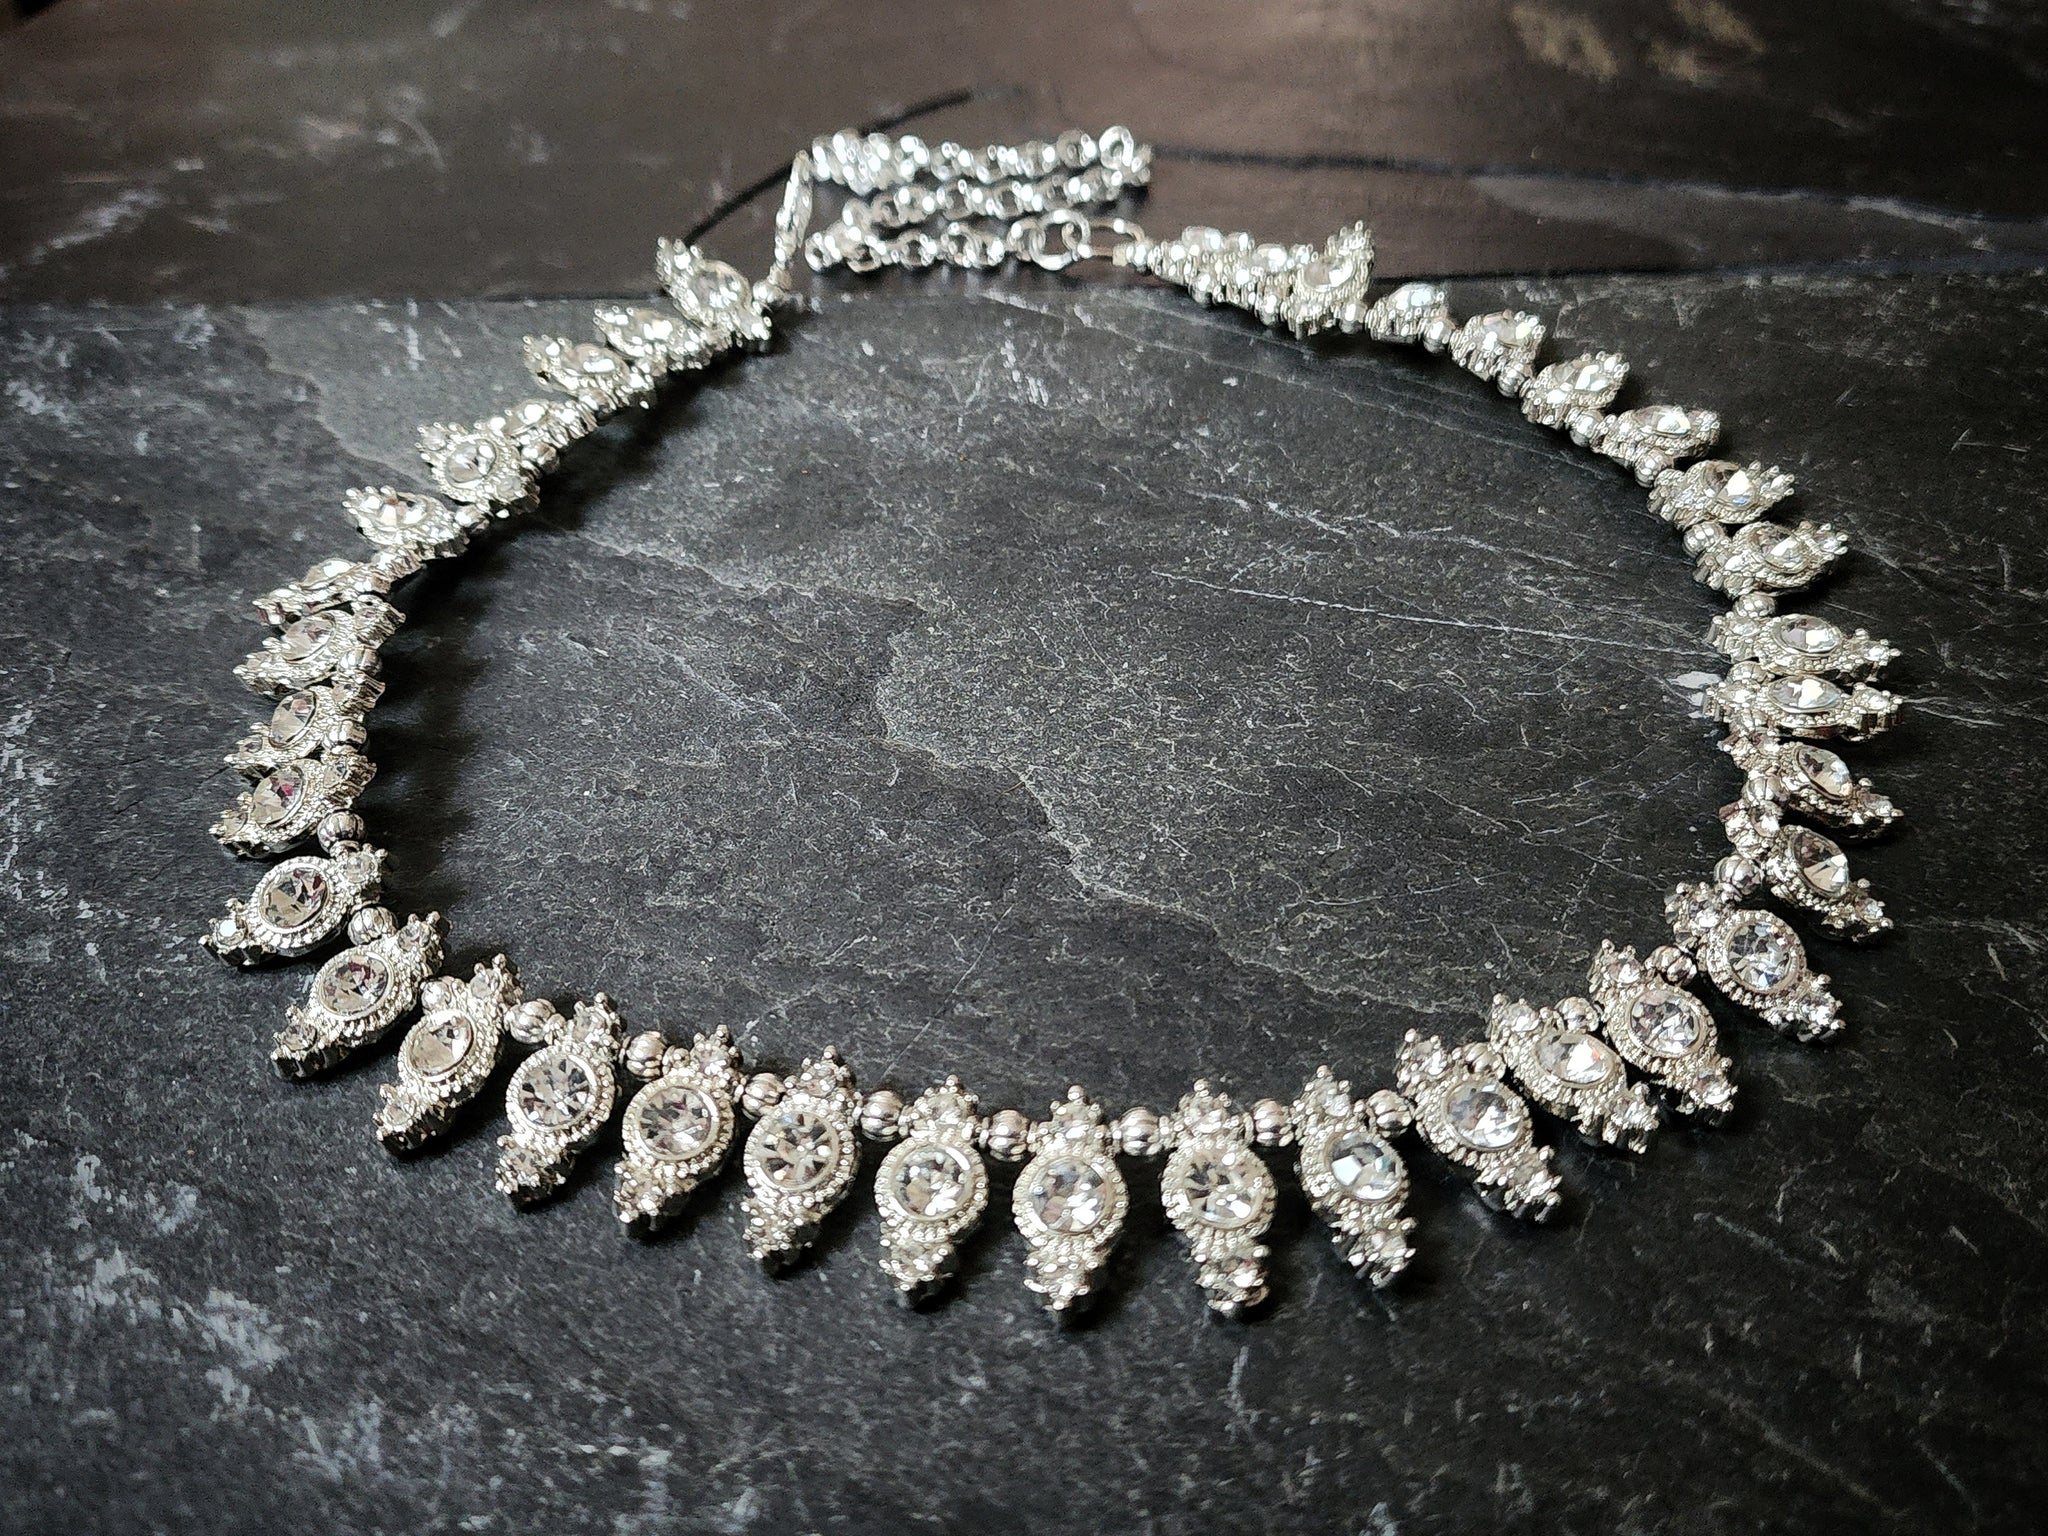 Royal Rhinestone Collar Necklace Fantasy Jewelry